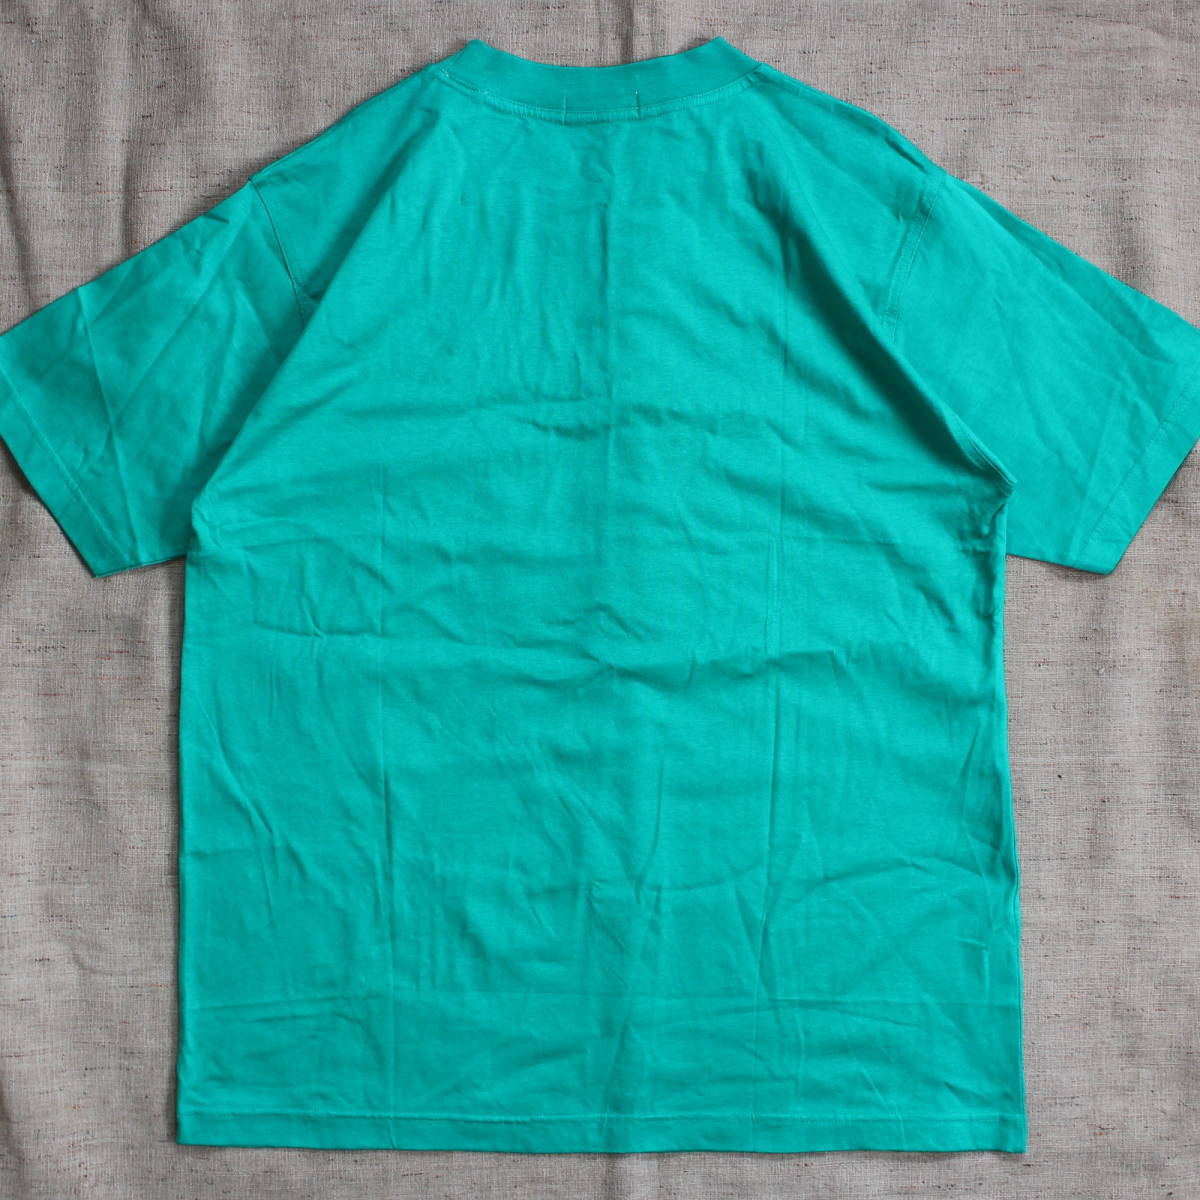  rare 1980-90s tag equipped YVES SAINT LAURENT Vintage T-shirt art mezzo n green Eve sun rolan ivu Vintage French 